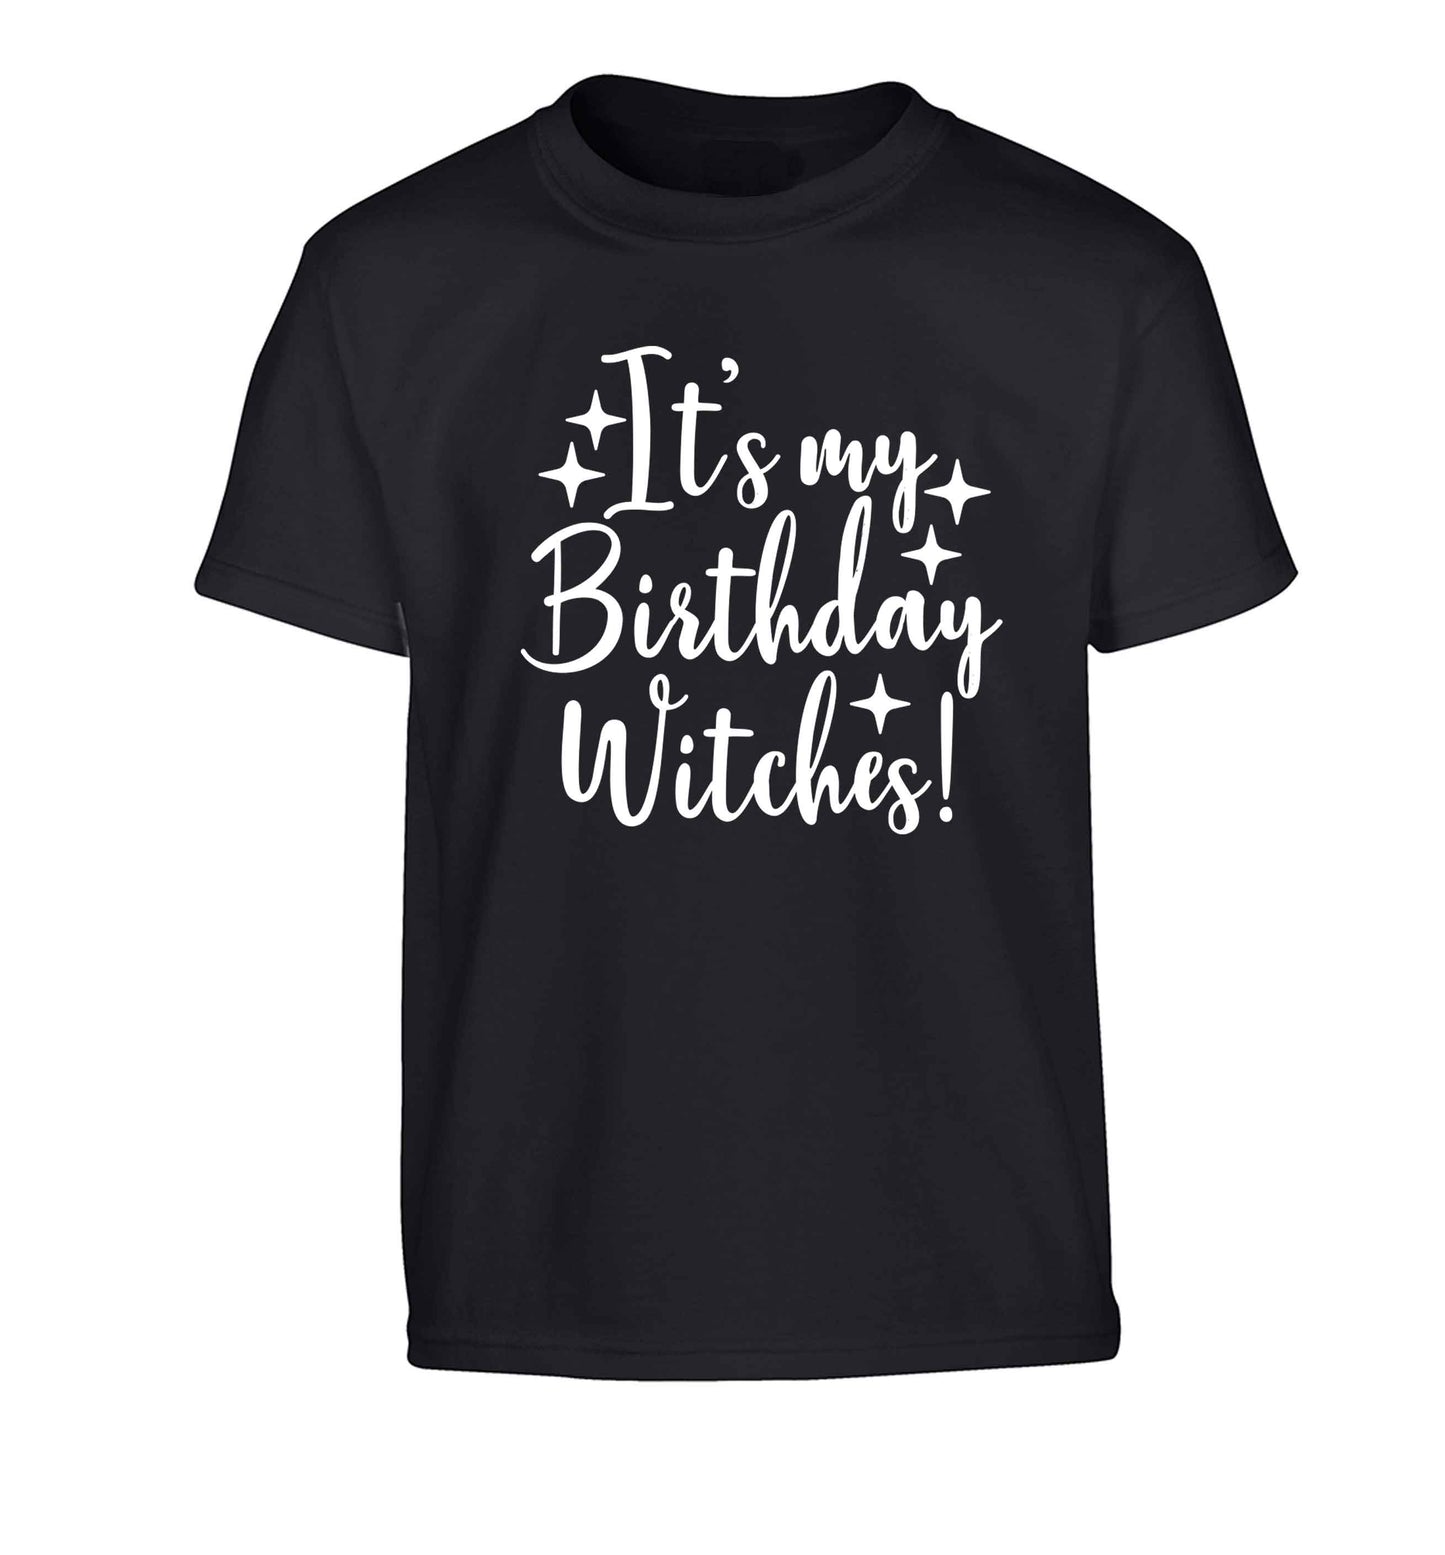 It's my birthday witches!Children's black Tshirt 12-13 Years